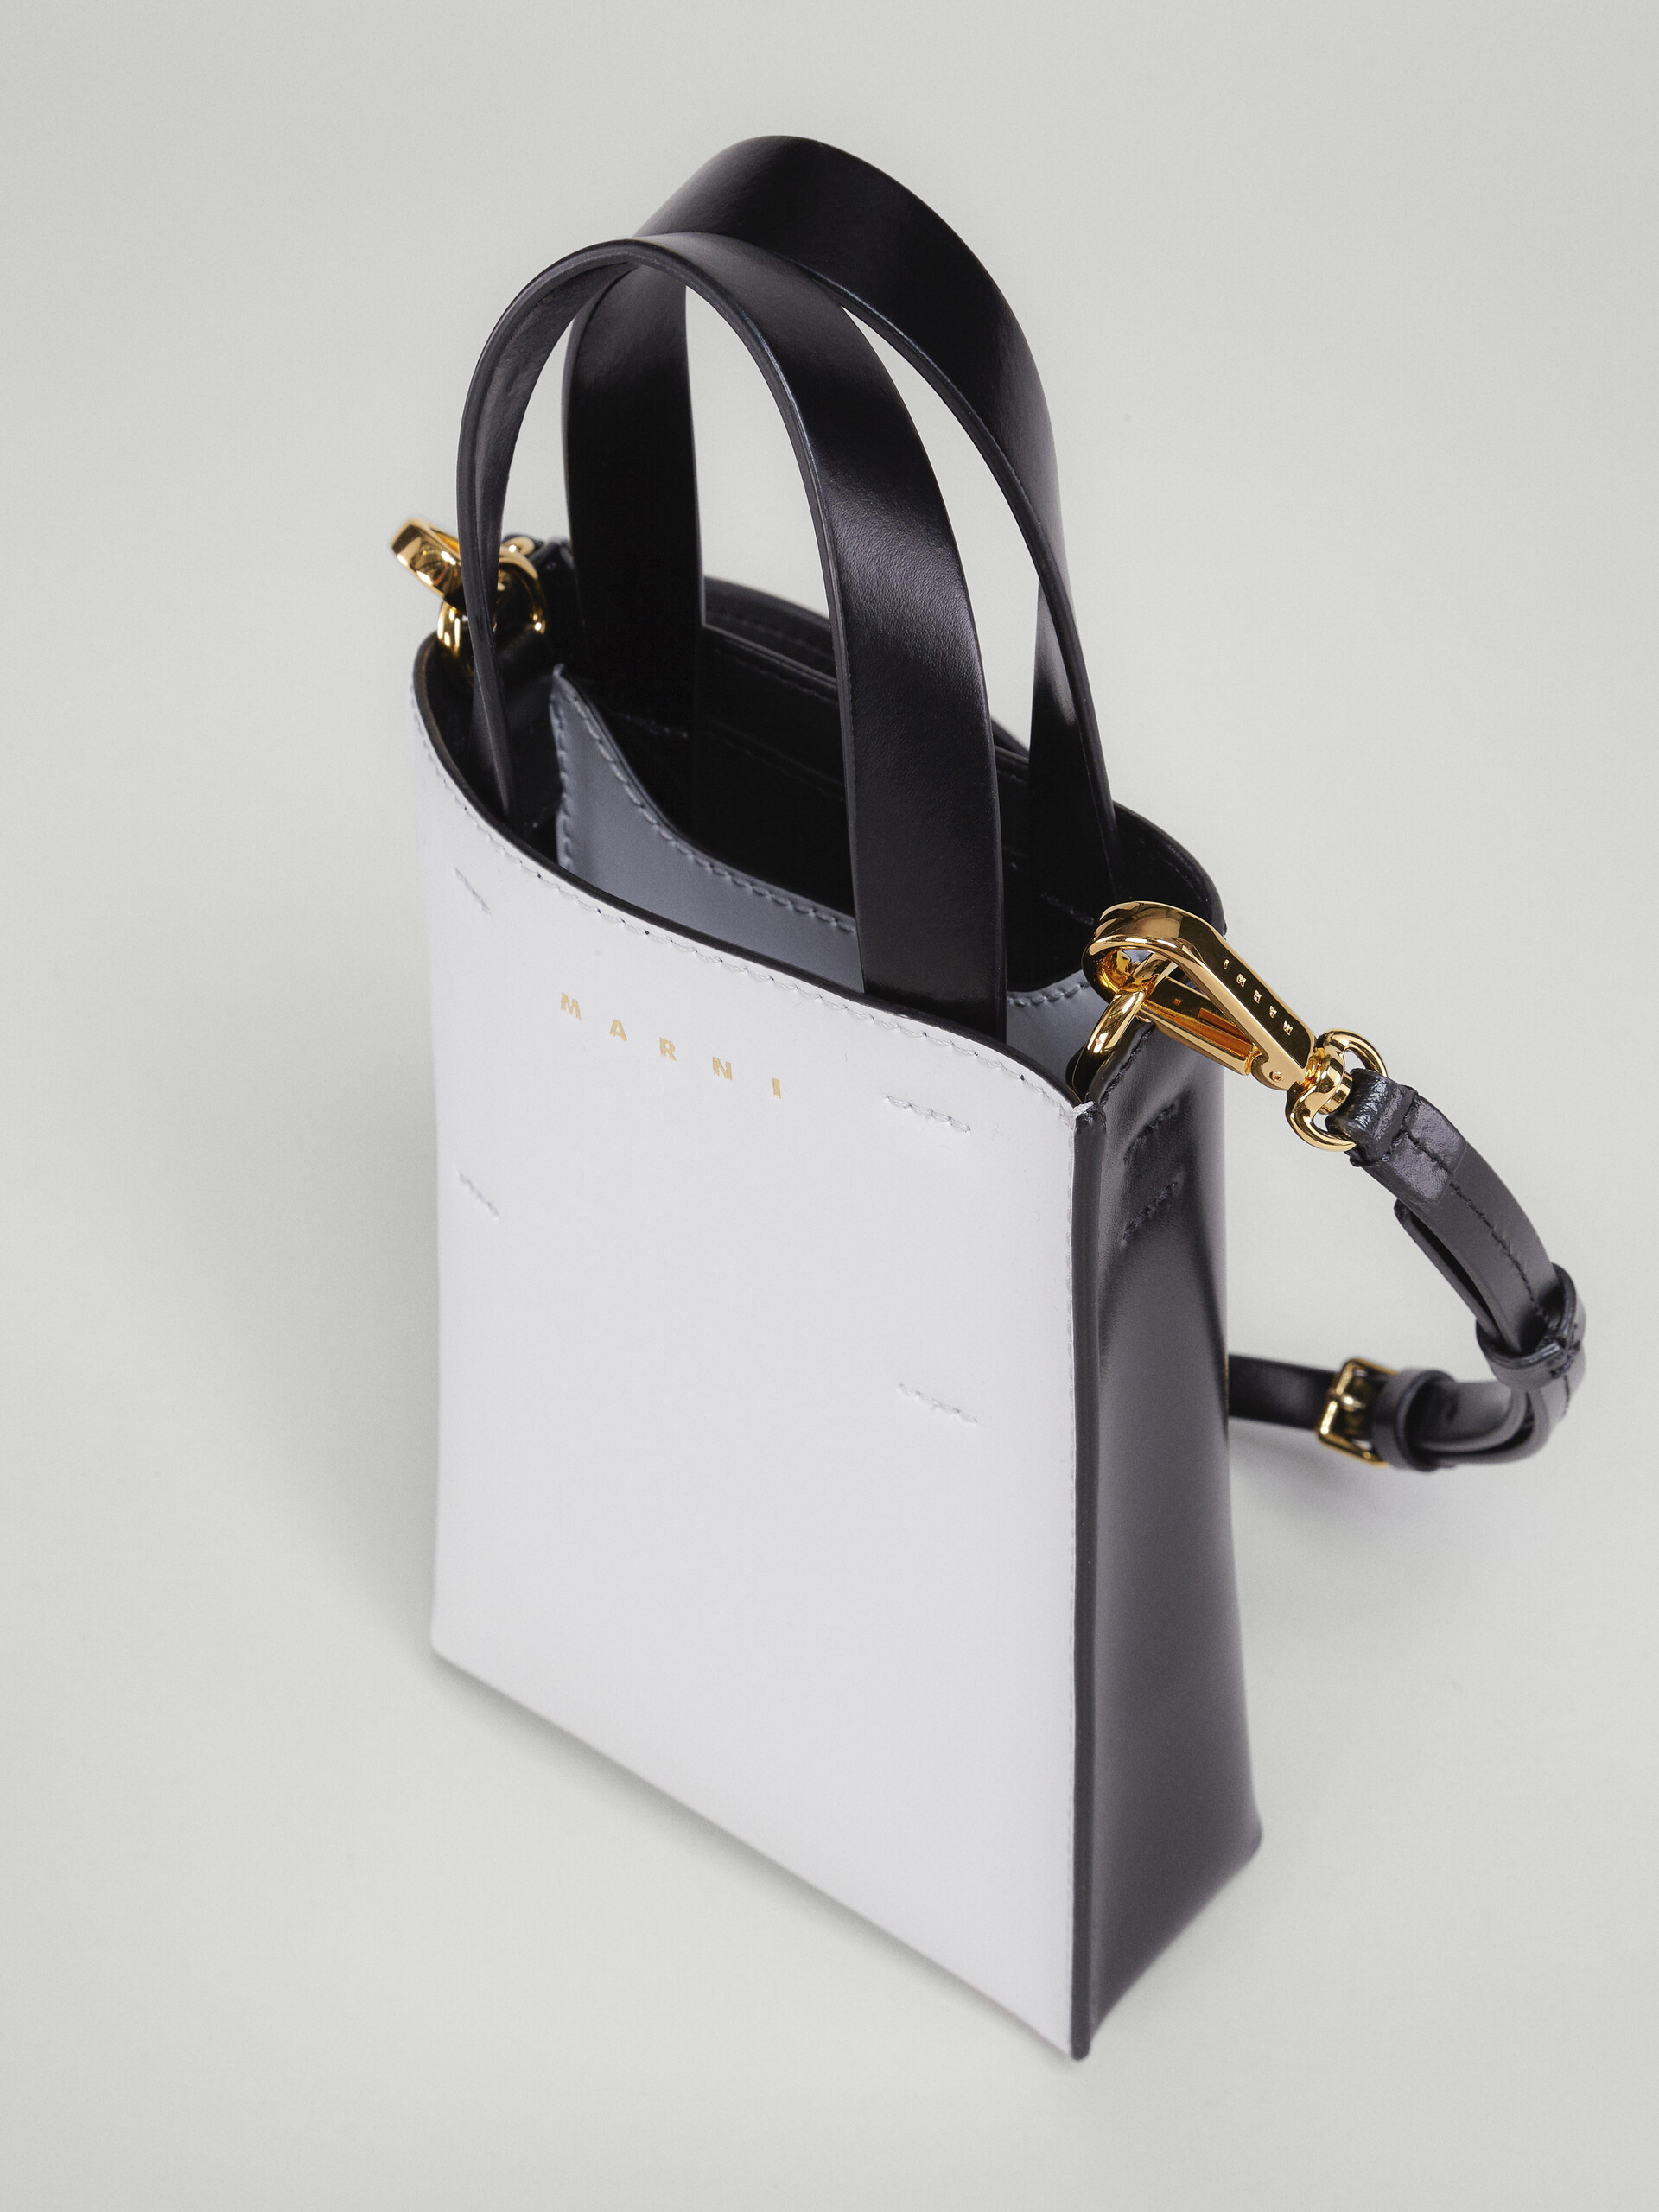 MUSEO bag nano in pelle bianca e nera - Borse shopping - Image 4